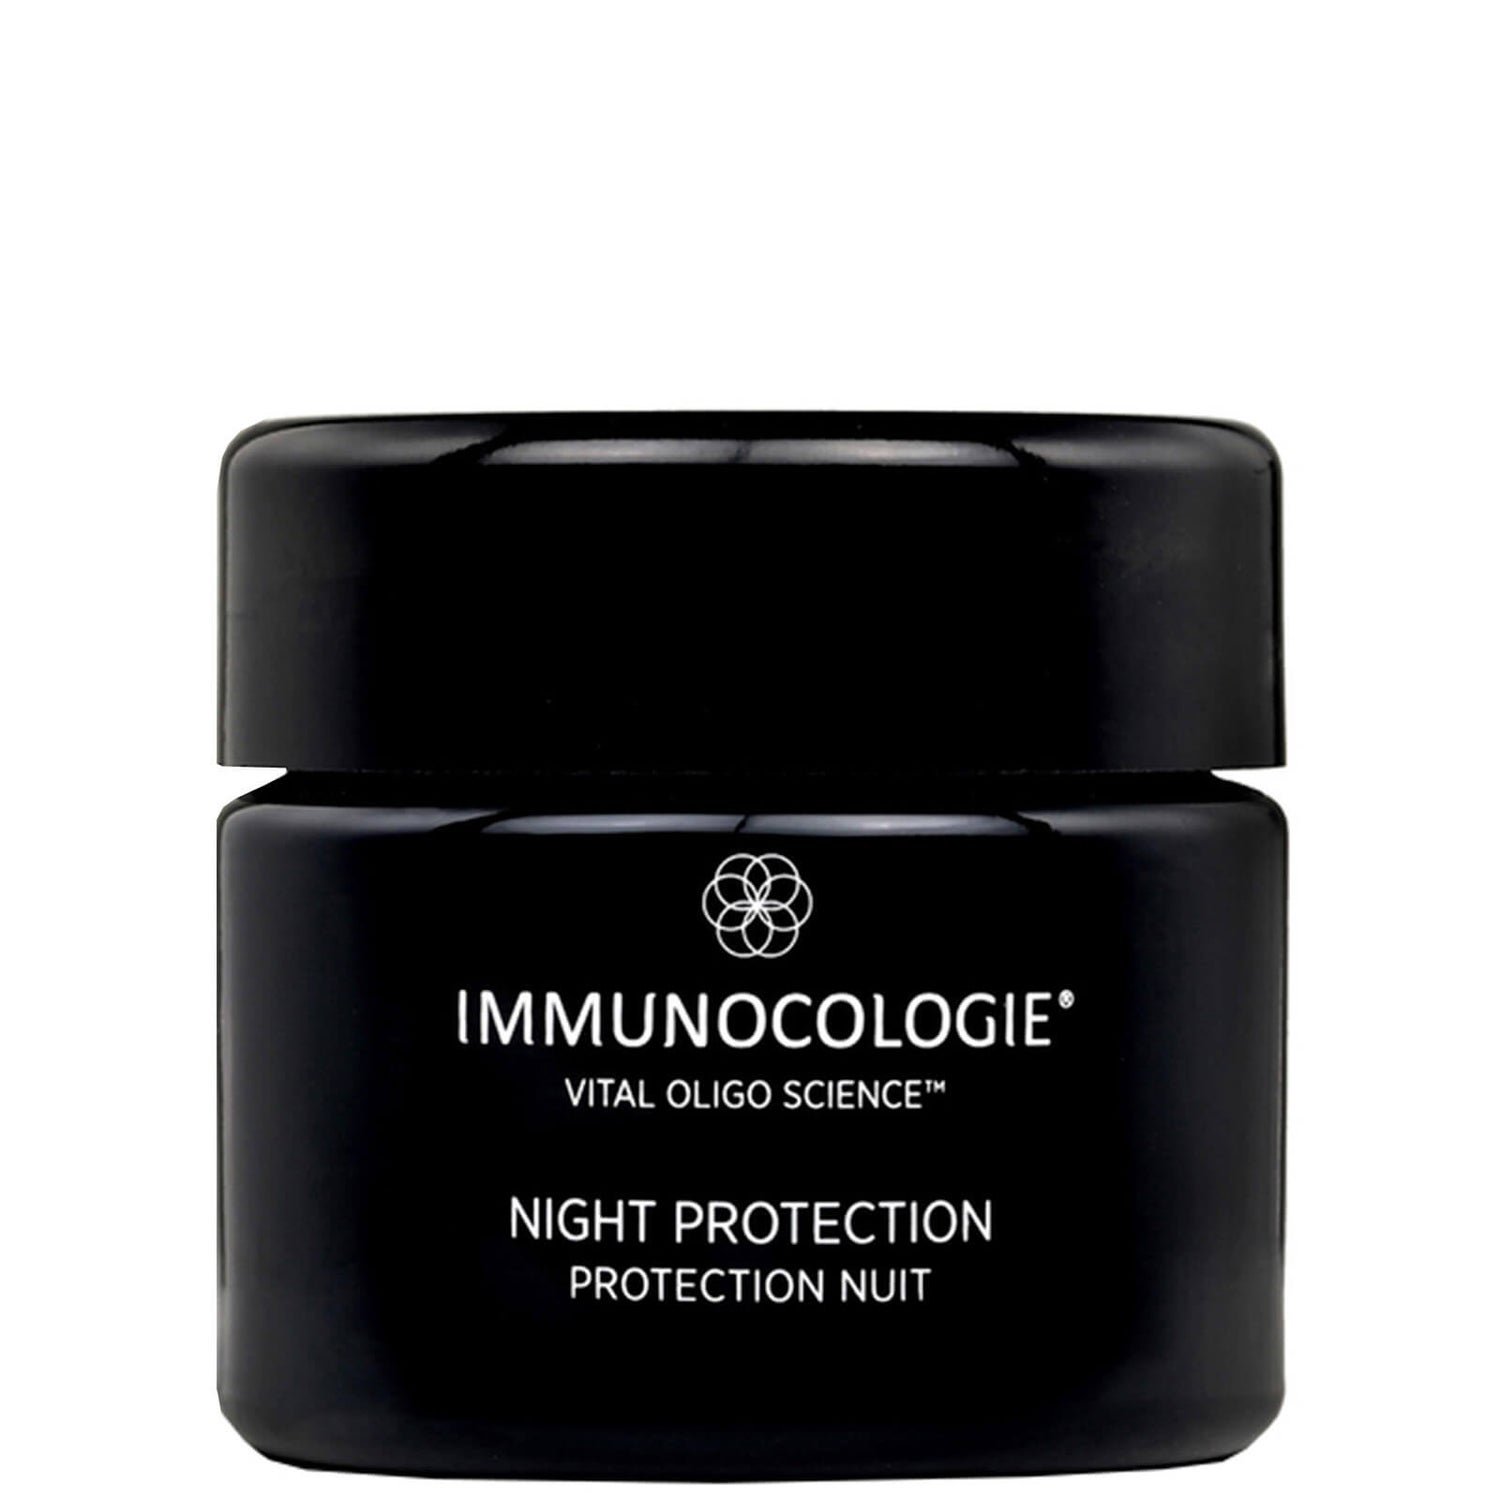 Immunocologie Night Protection Moisturiser 50ml